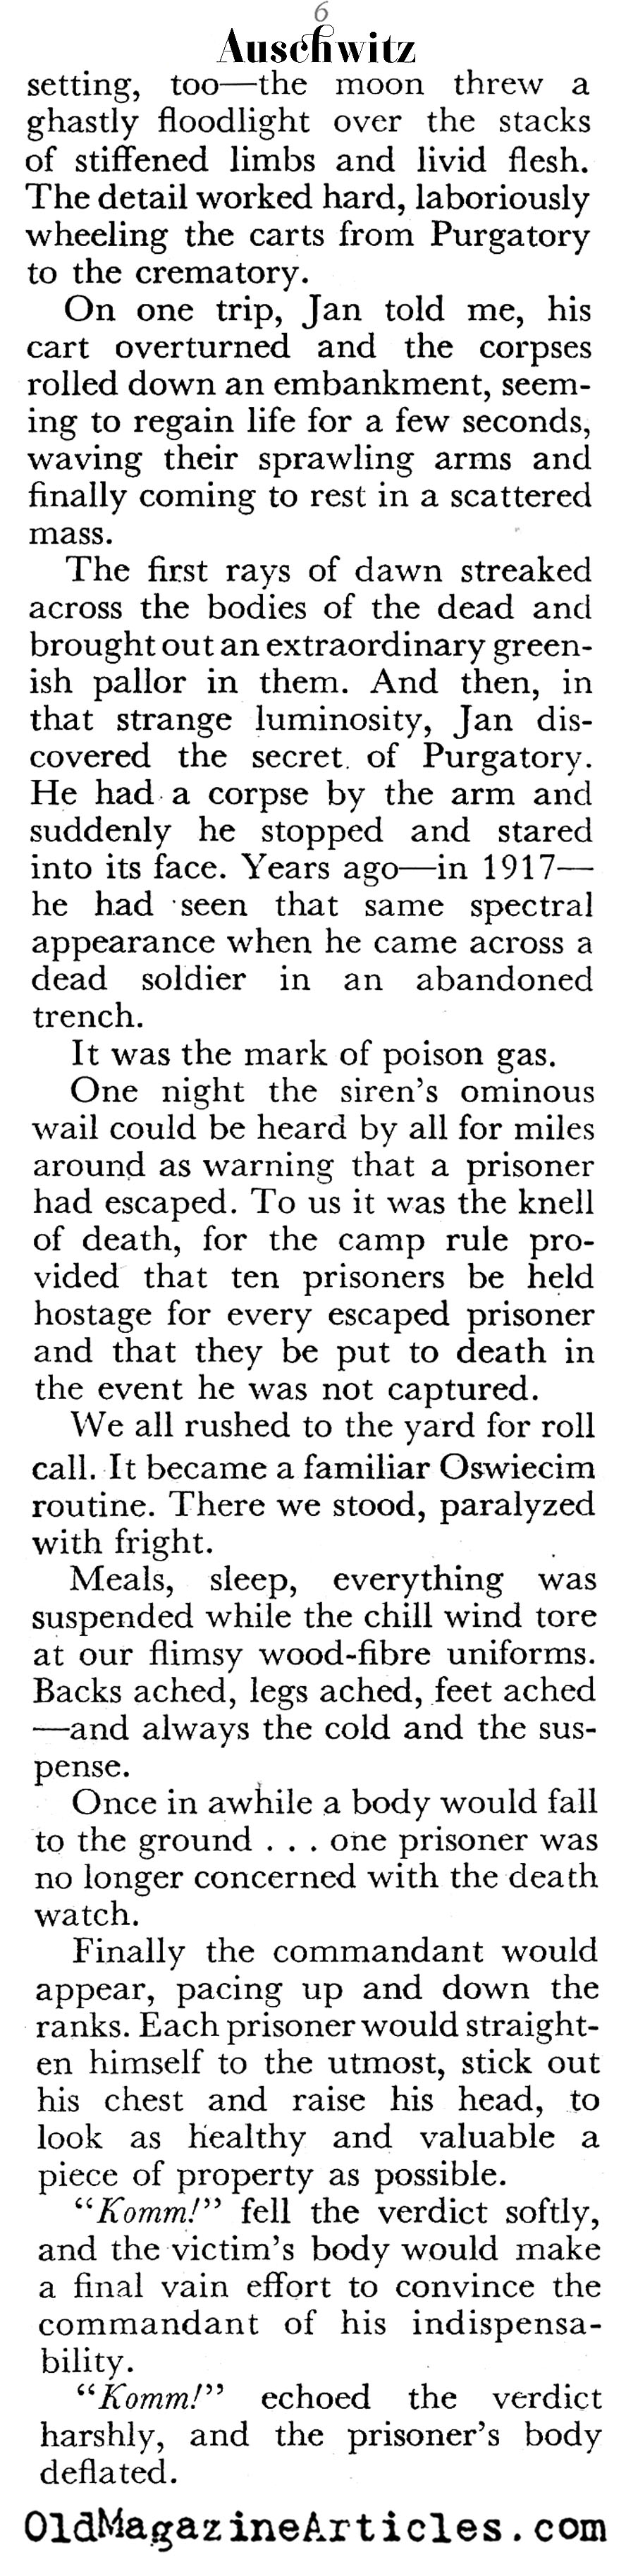 Auschwitz (Coronet Magazine, 1945)